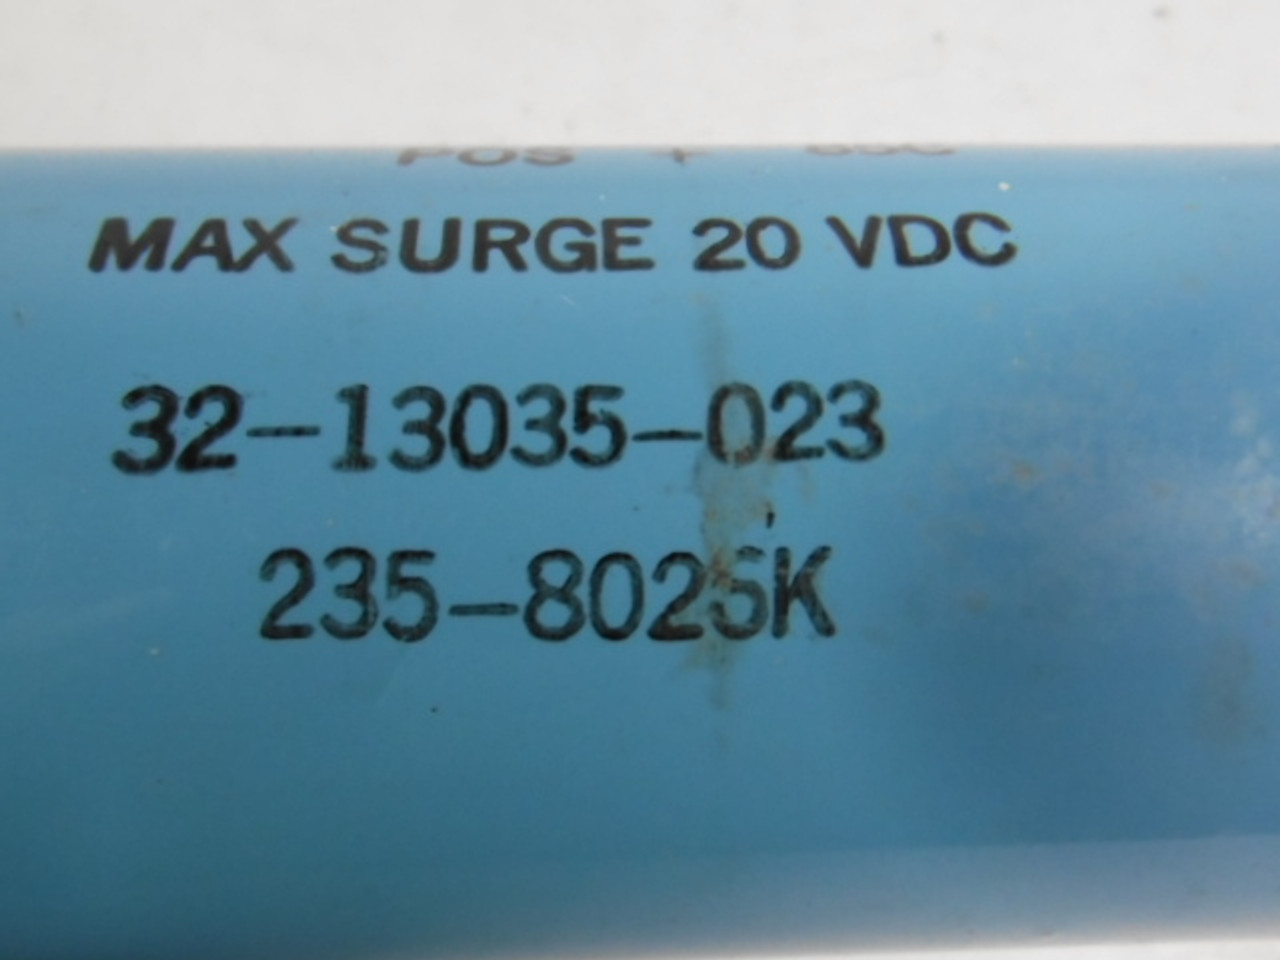 Mallory 235-8026K Capacitor 64000MFD 15V DC USED